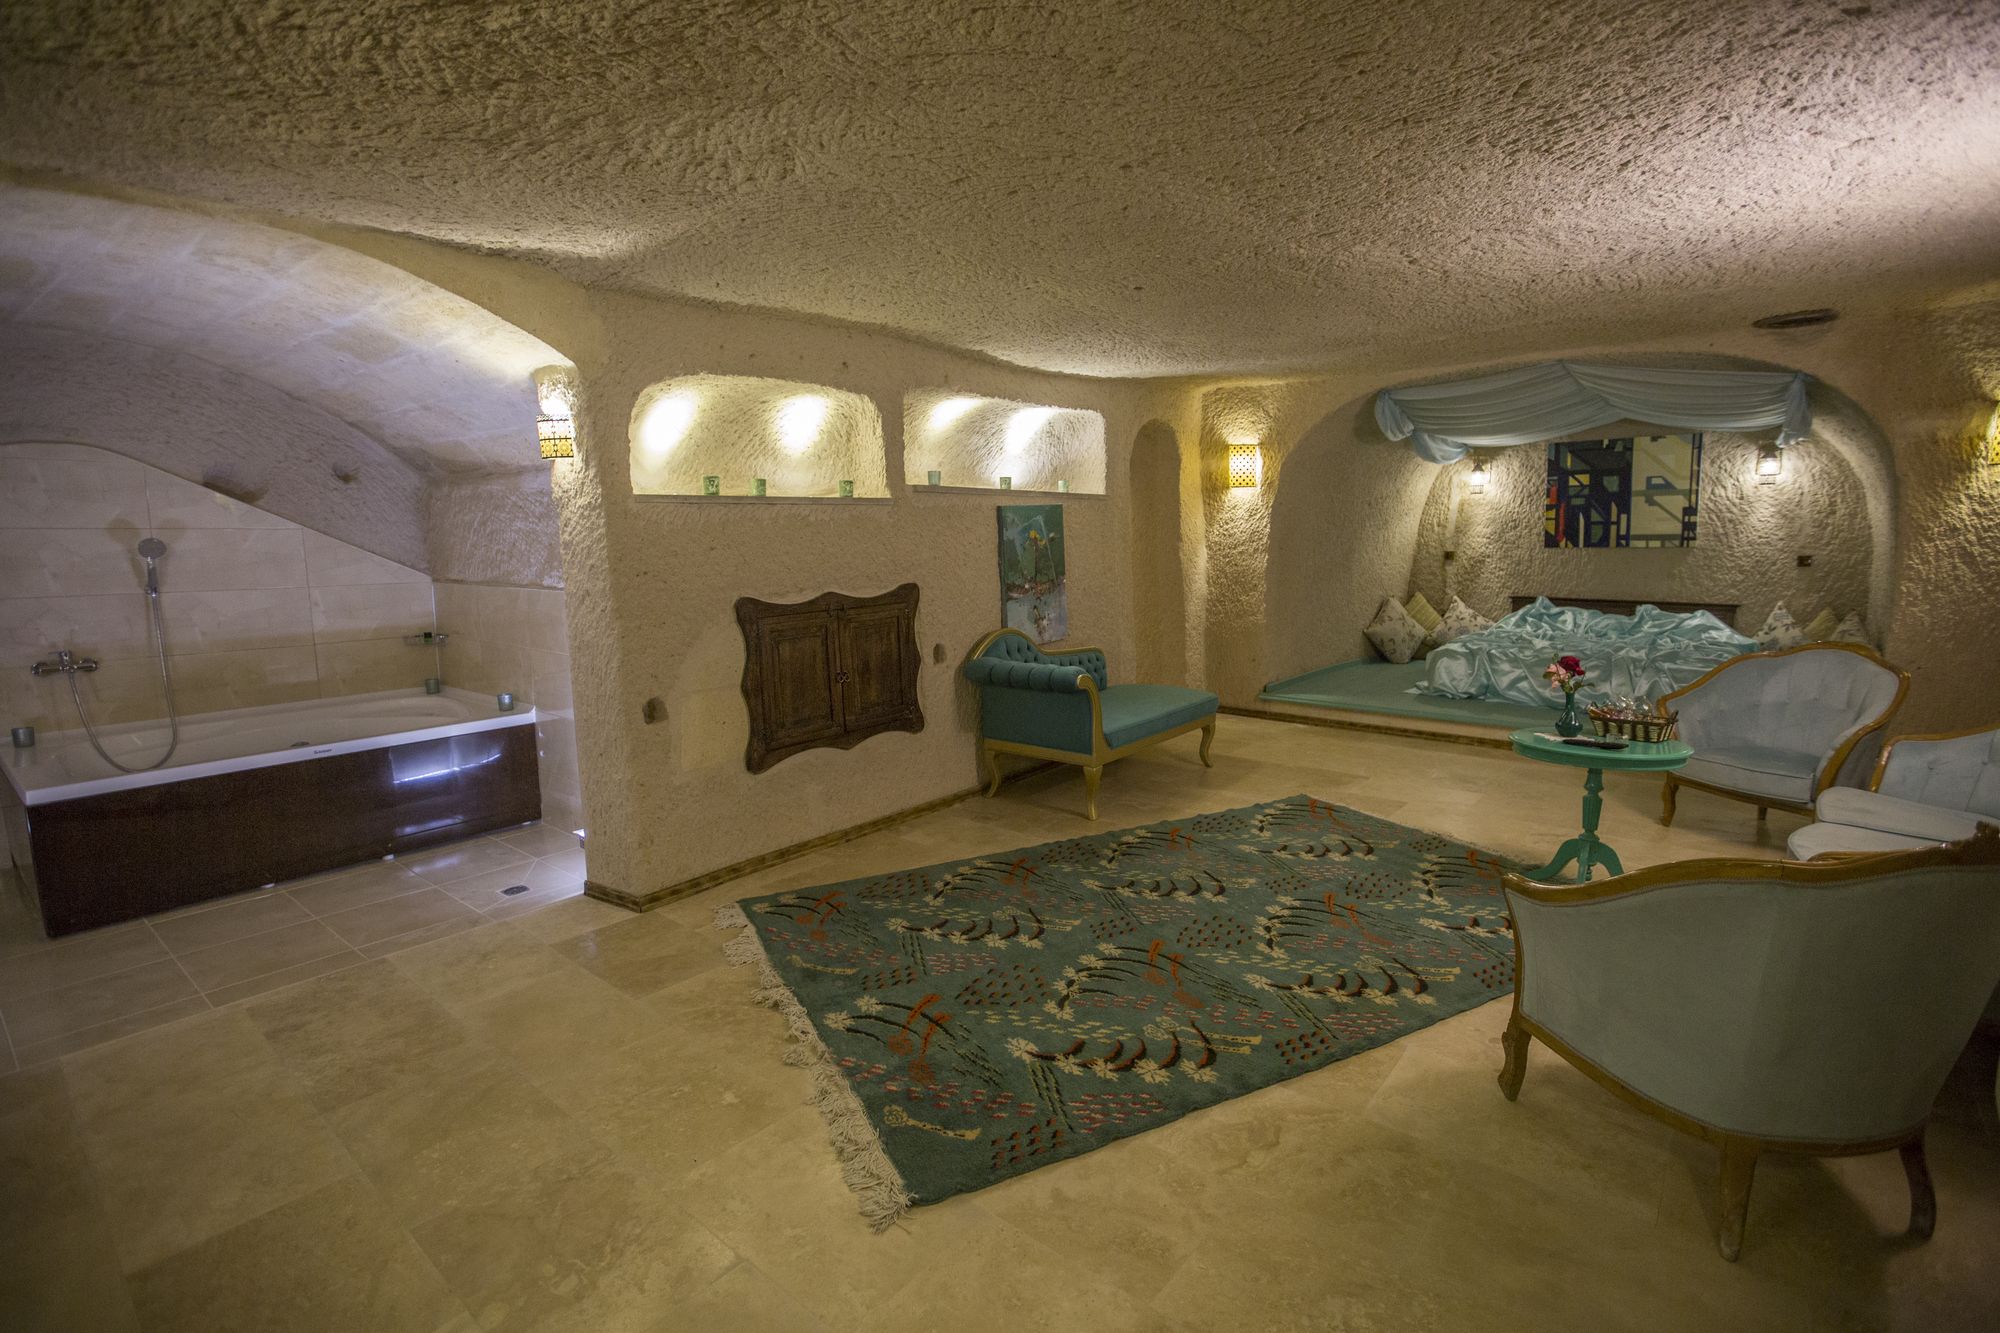 Yaren Cave House